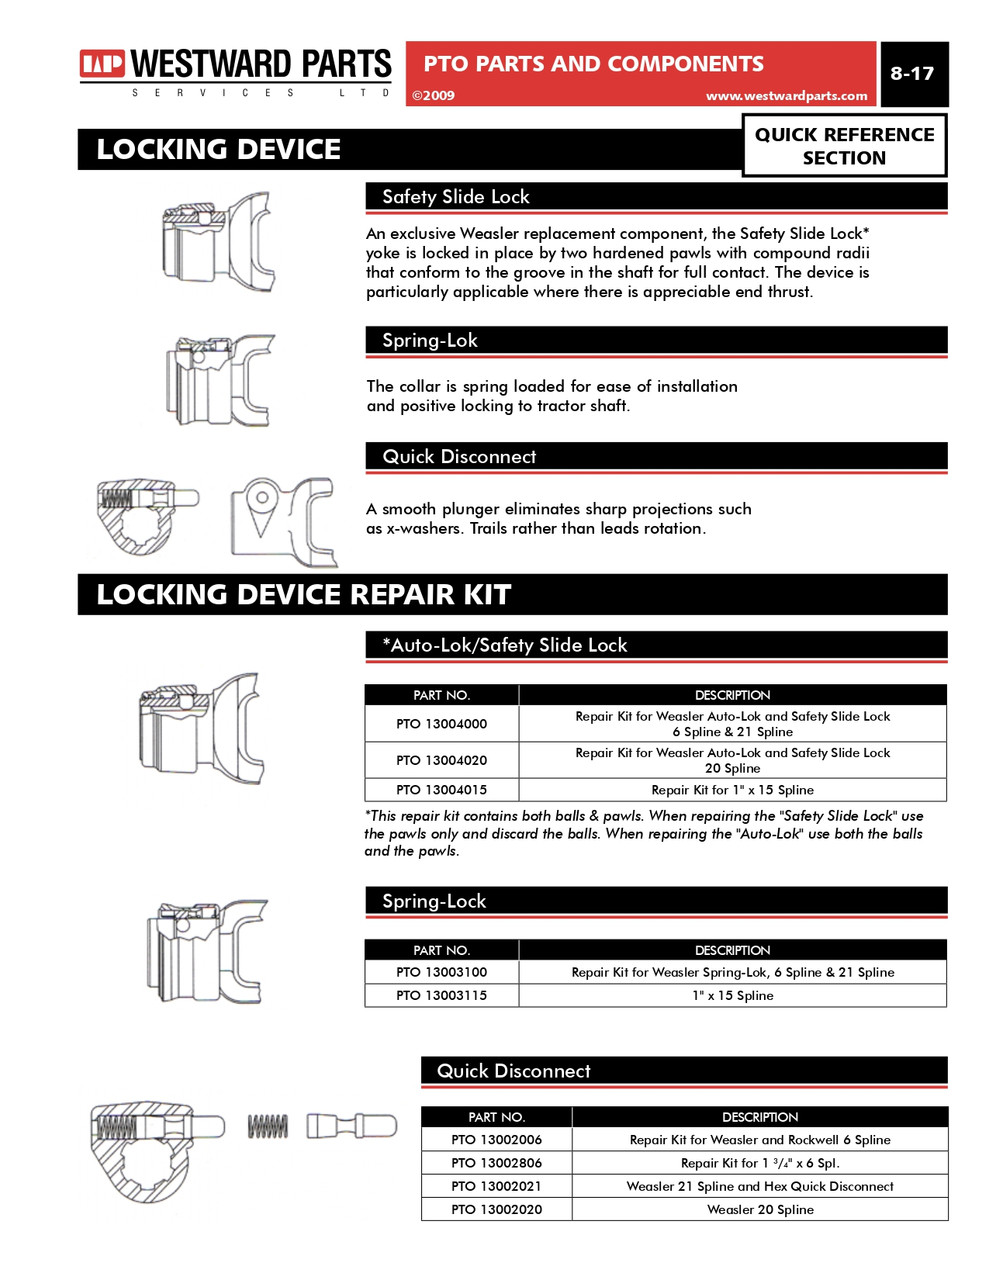 1-3/8"-6/21 Spline - QD Yoke Auto & Safety Slide Lock Repair Kit - North American Multiseries  PTO13004000